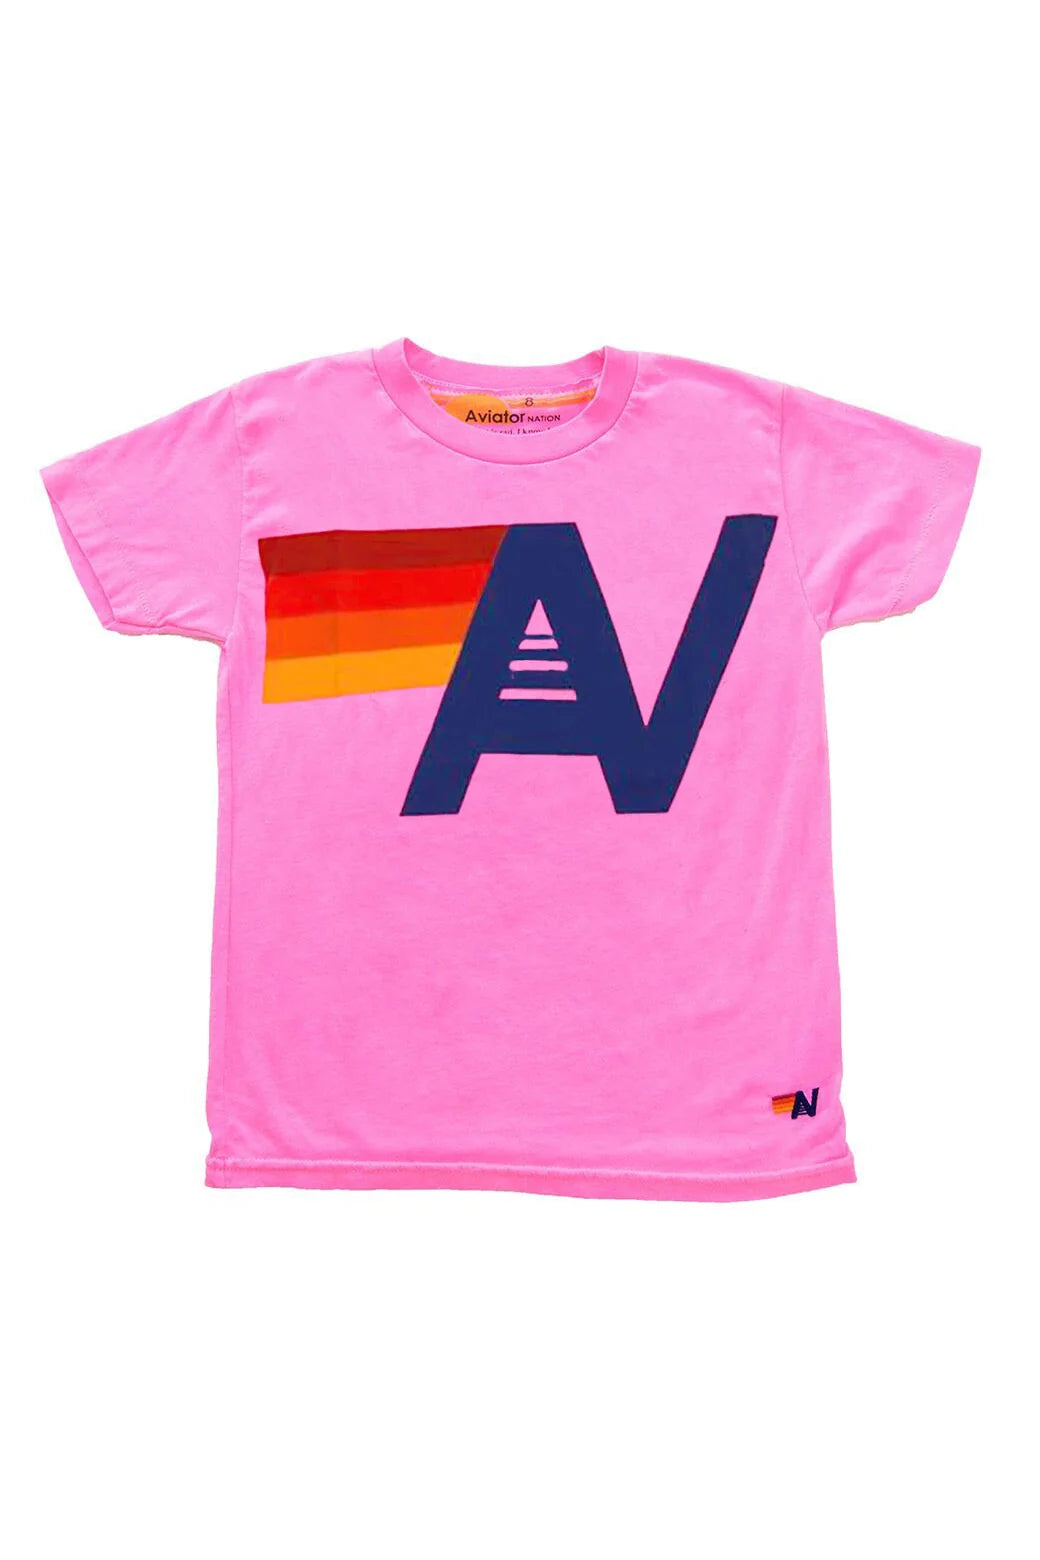 Aviator Nation Kid's Logo Tee - Neon Pink